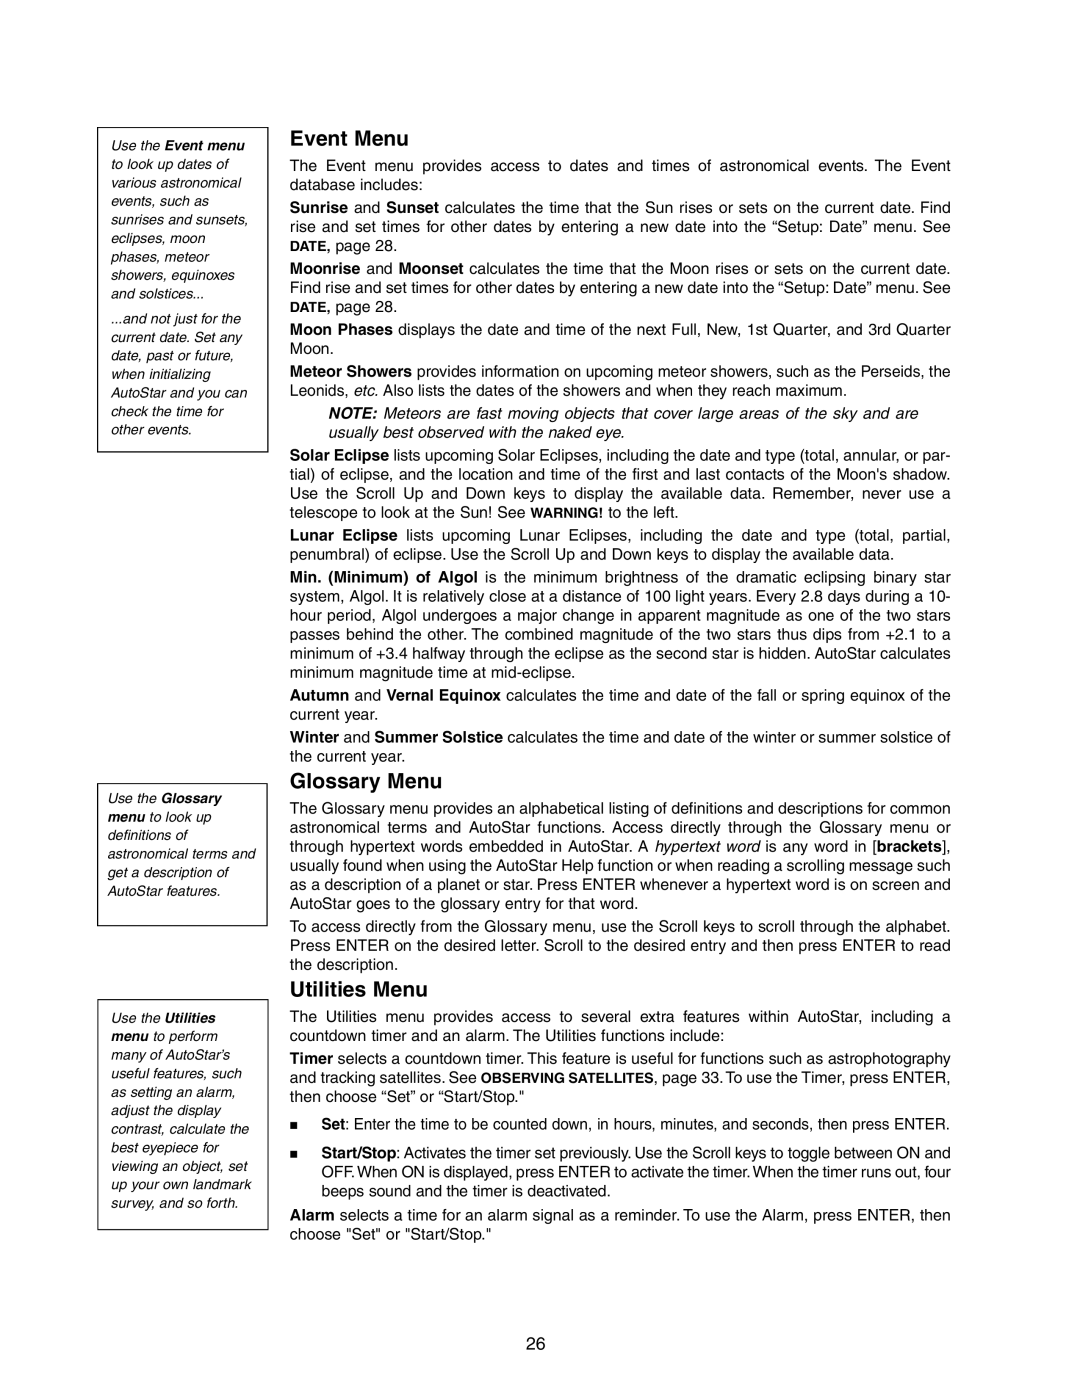 Meade LX90GPS instruction manual Event Menu, Glossary Menu, Utilities Menu 